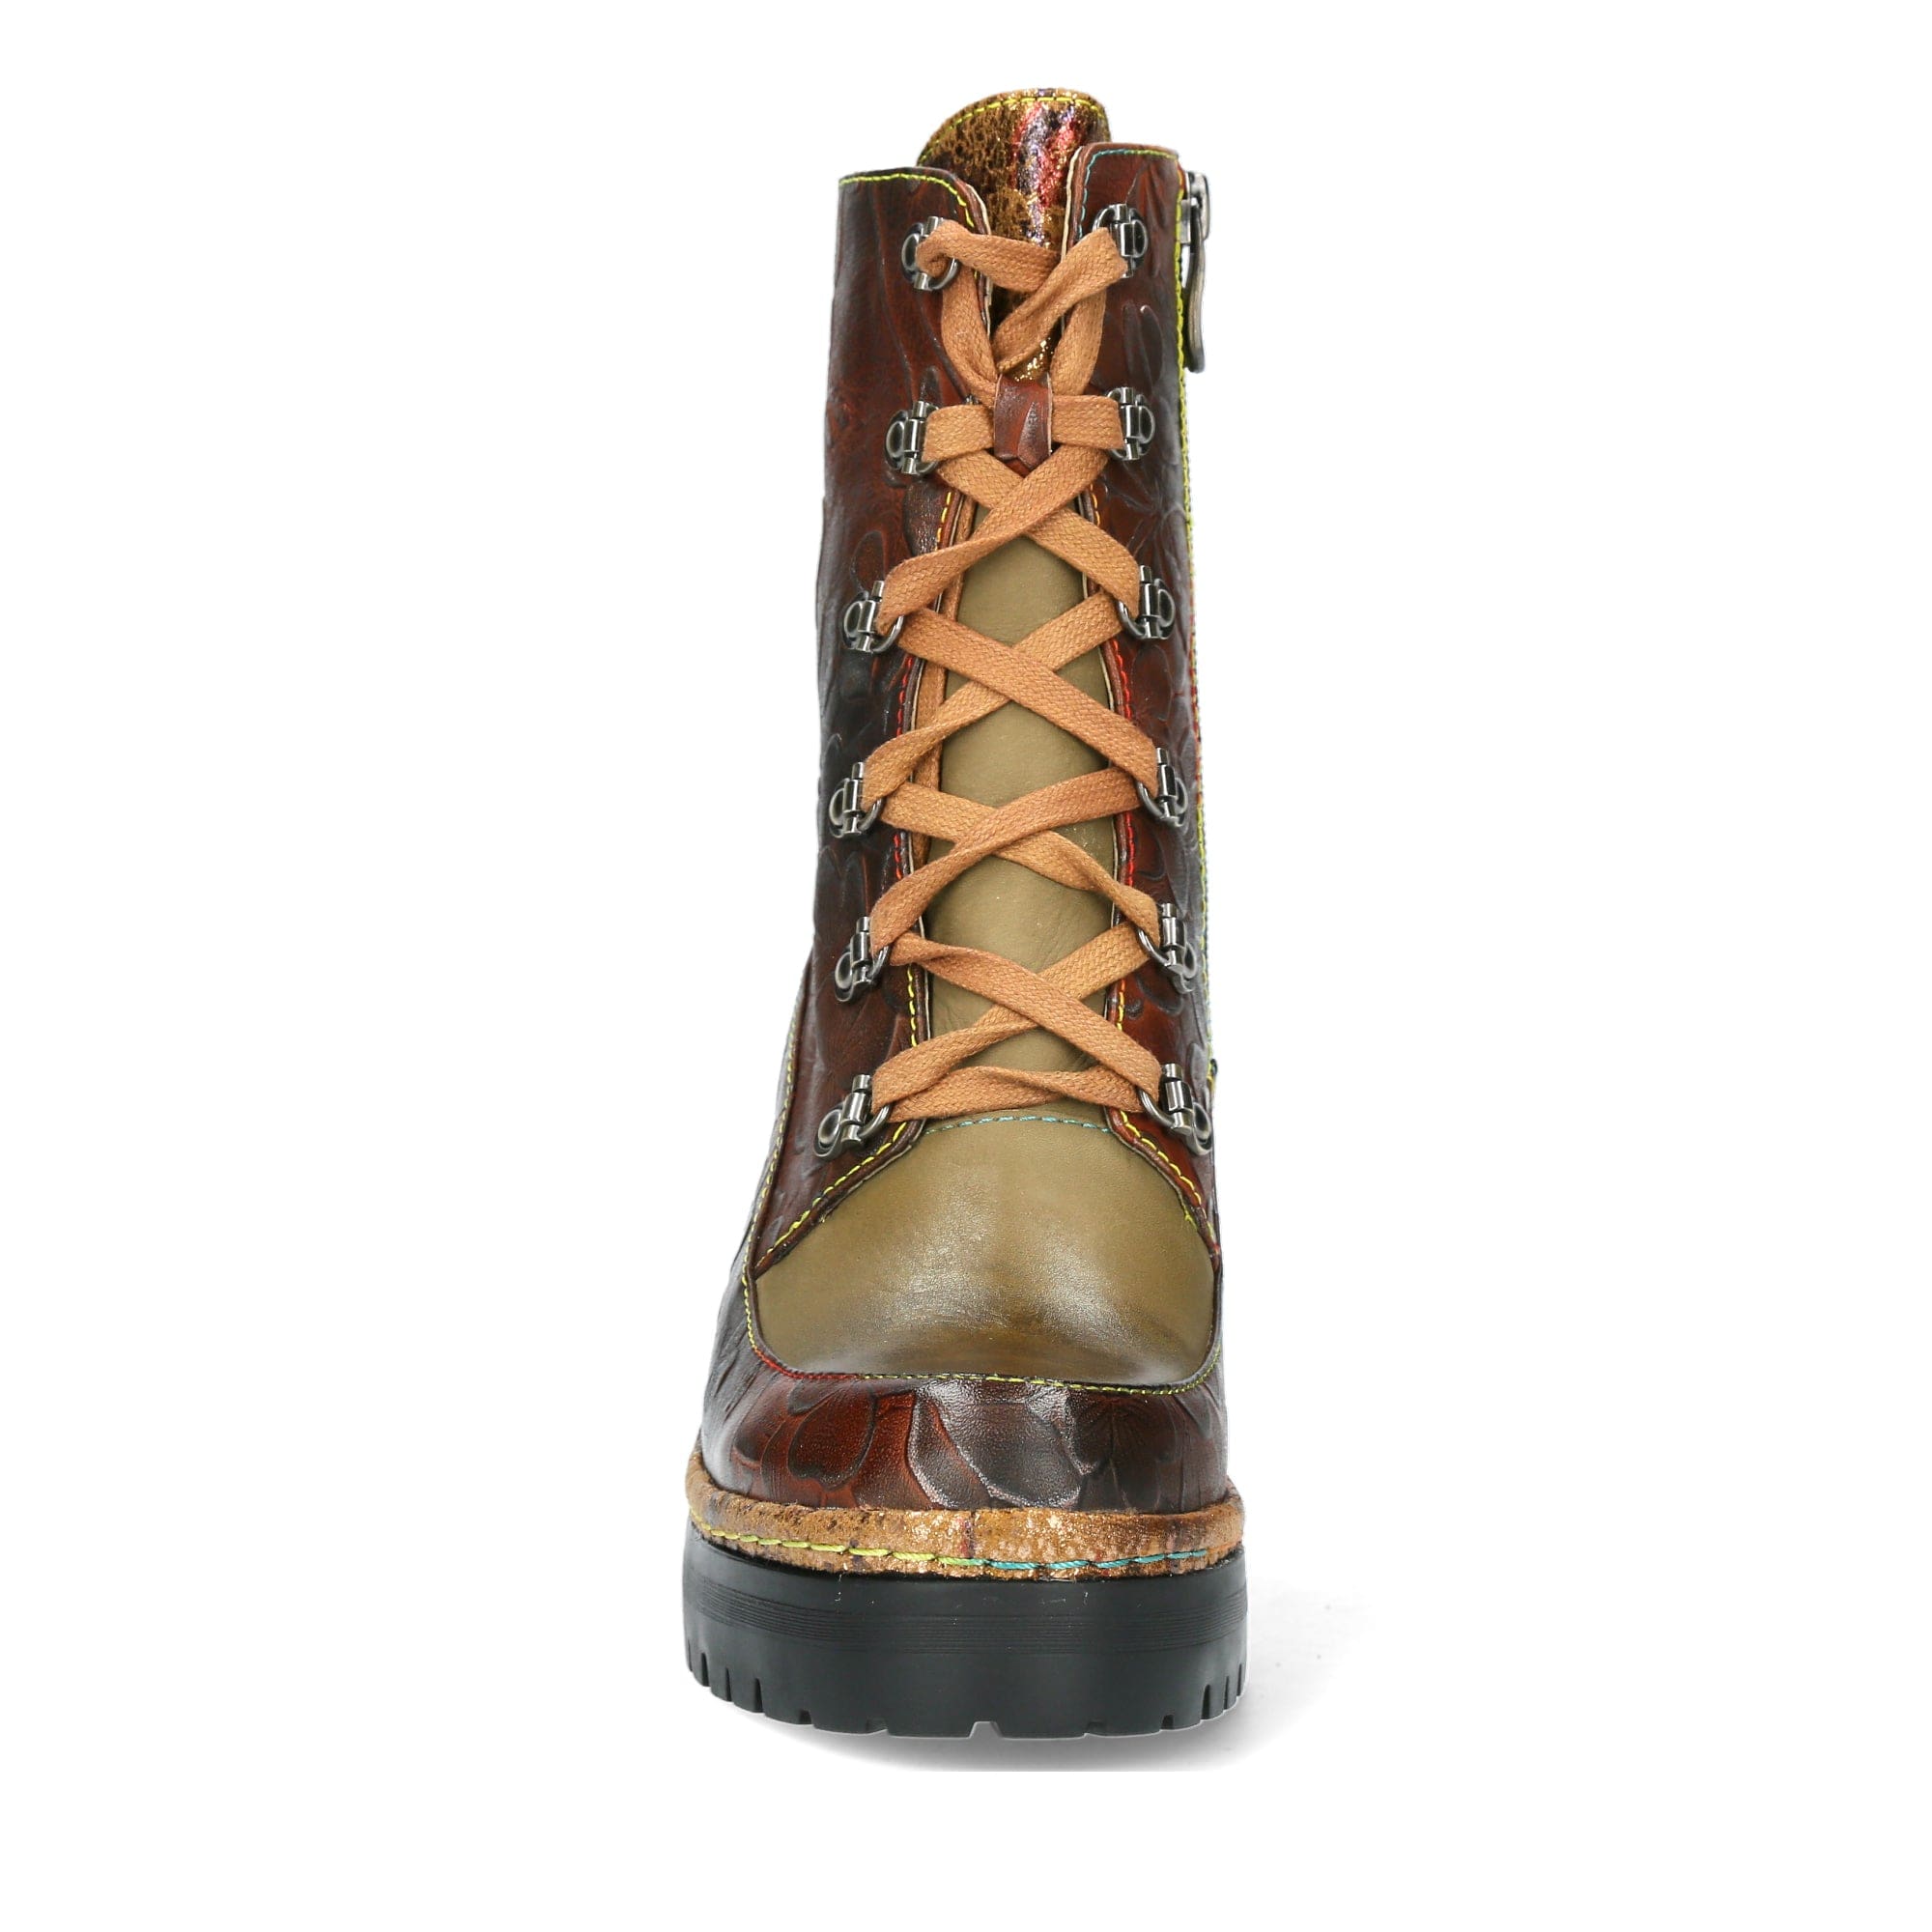 MONAO 02 shoe - Boots